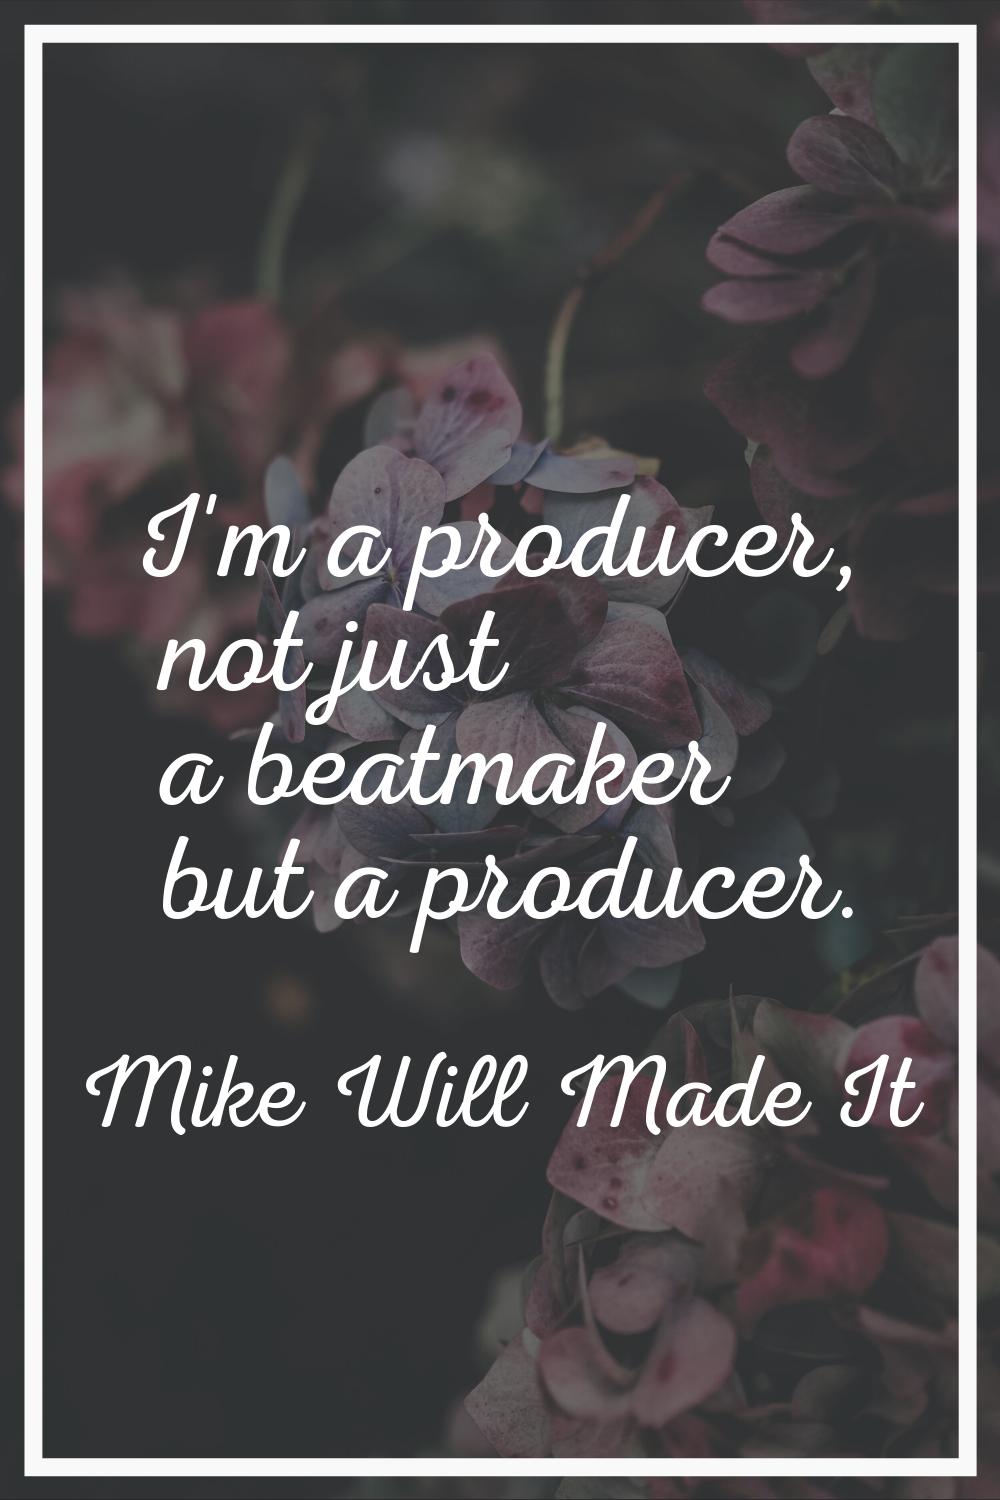 I'm a producer, not just a beatmaker but a producer.